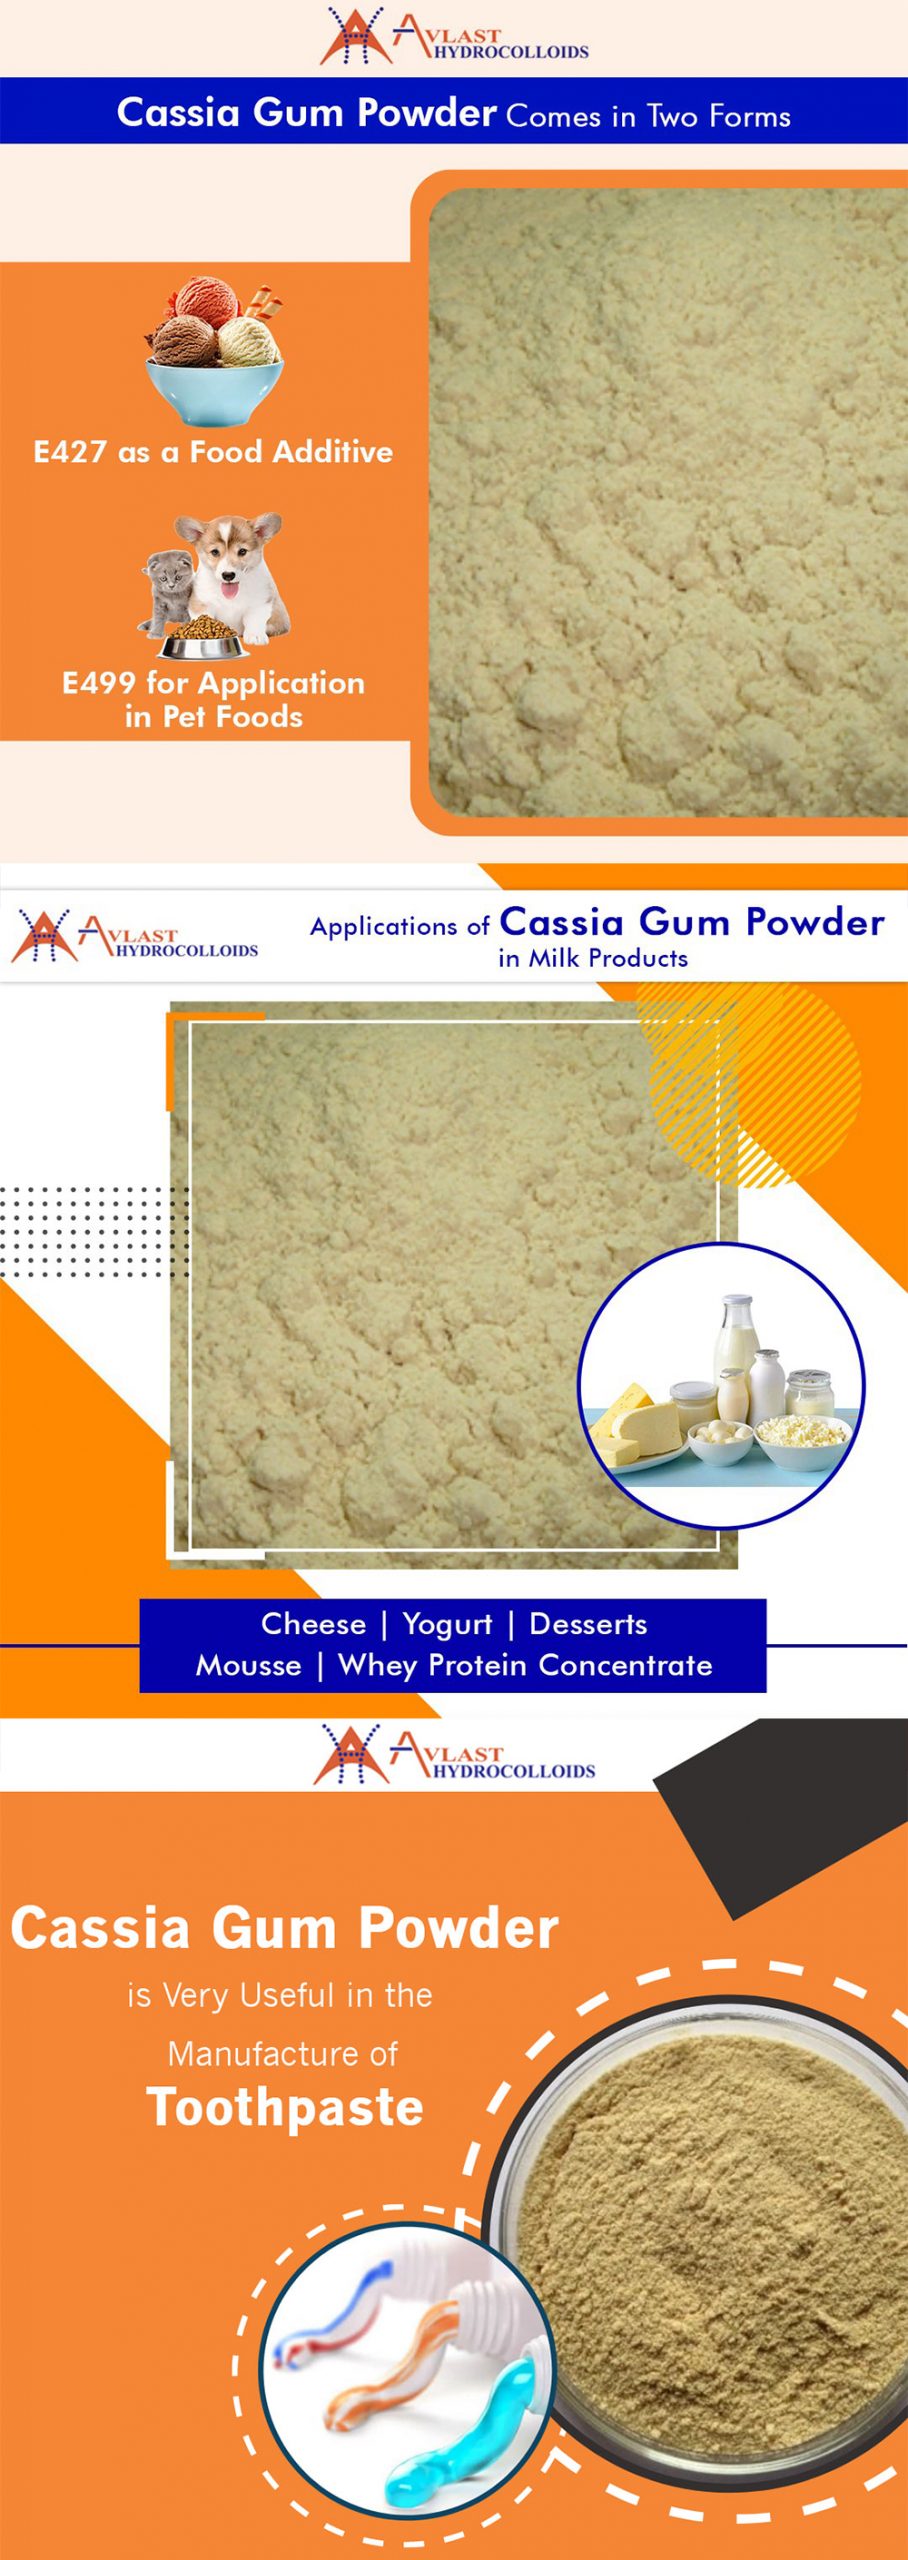 Cassia Gum Powder Usage in Nutraceuticals